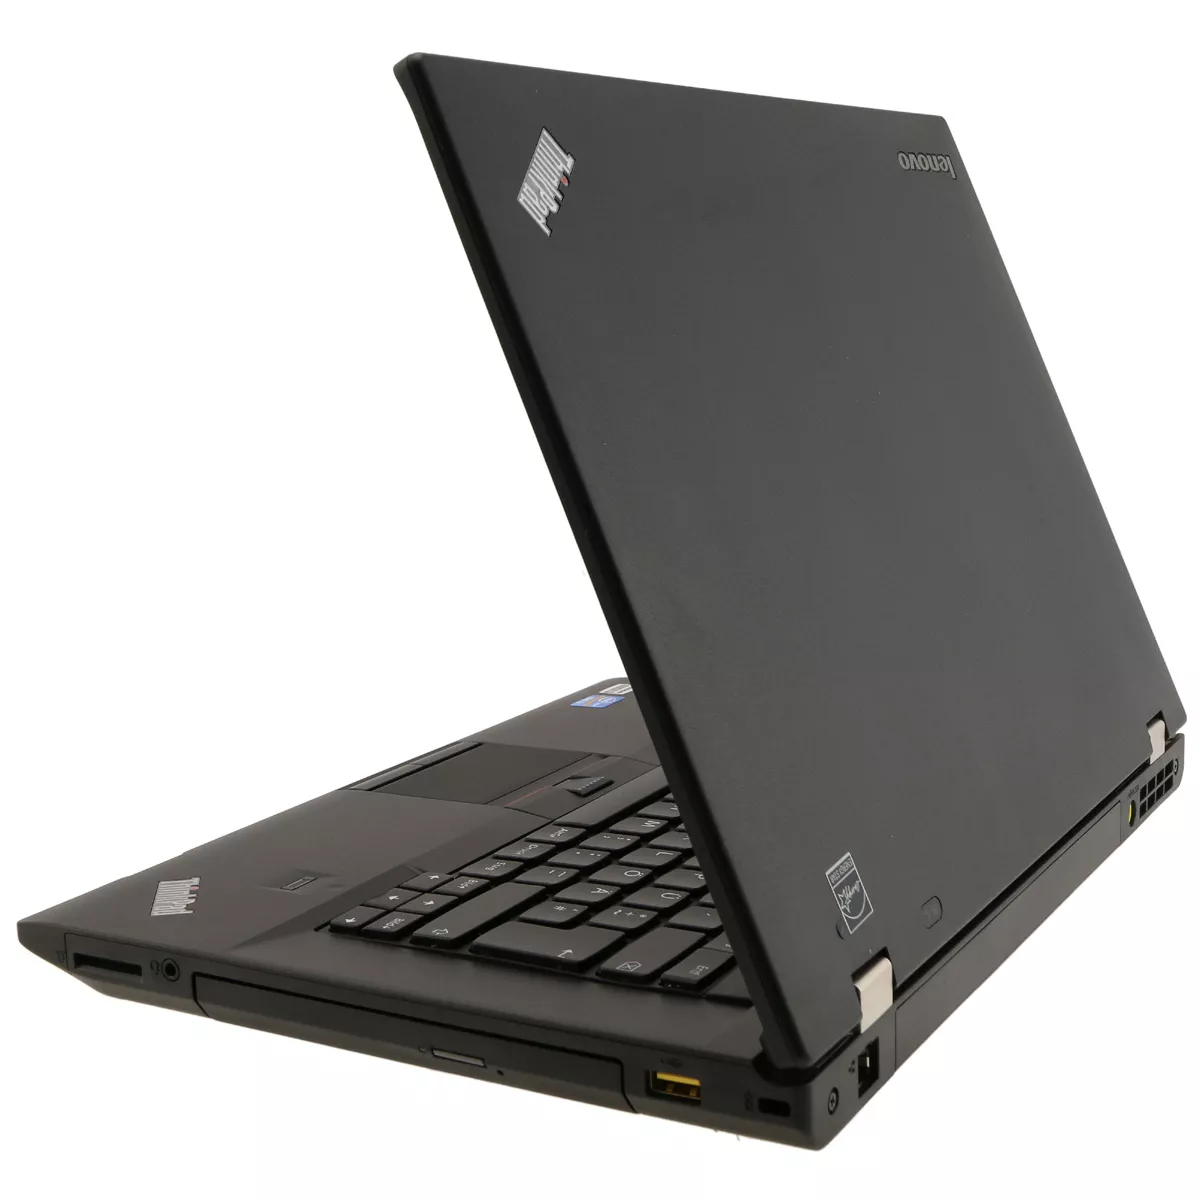 Lenovo ThinkPad L430 Core i5 3210M 2,5 GHz Webcam